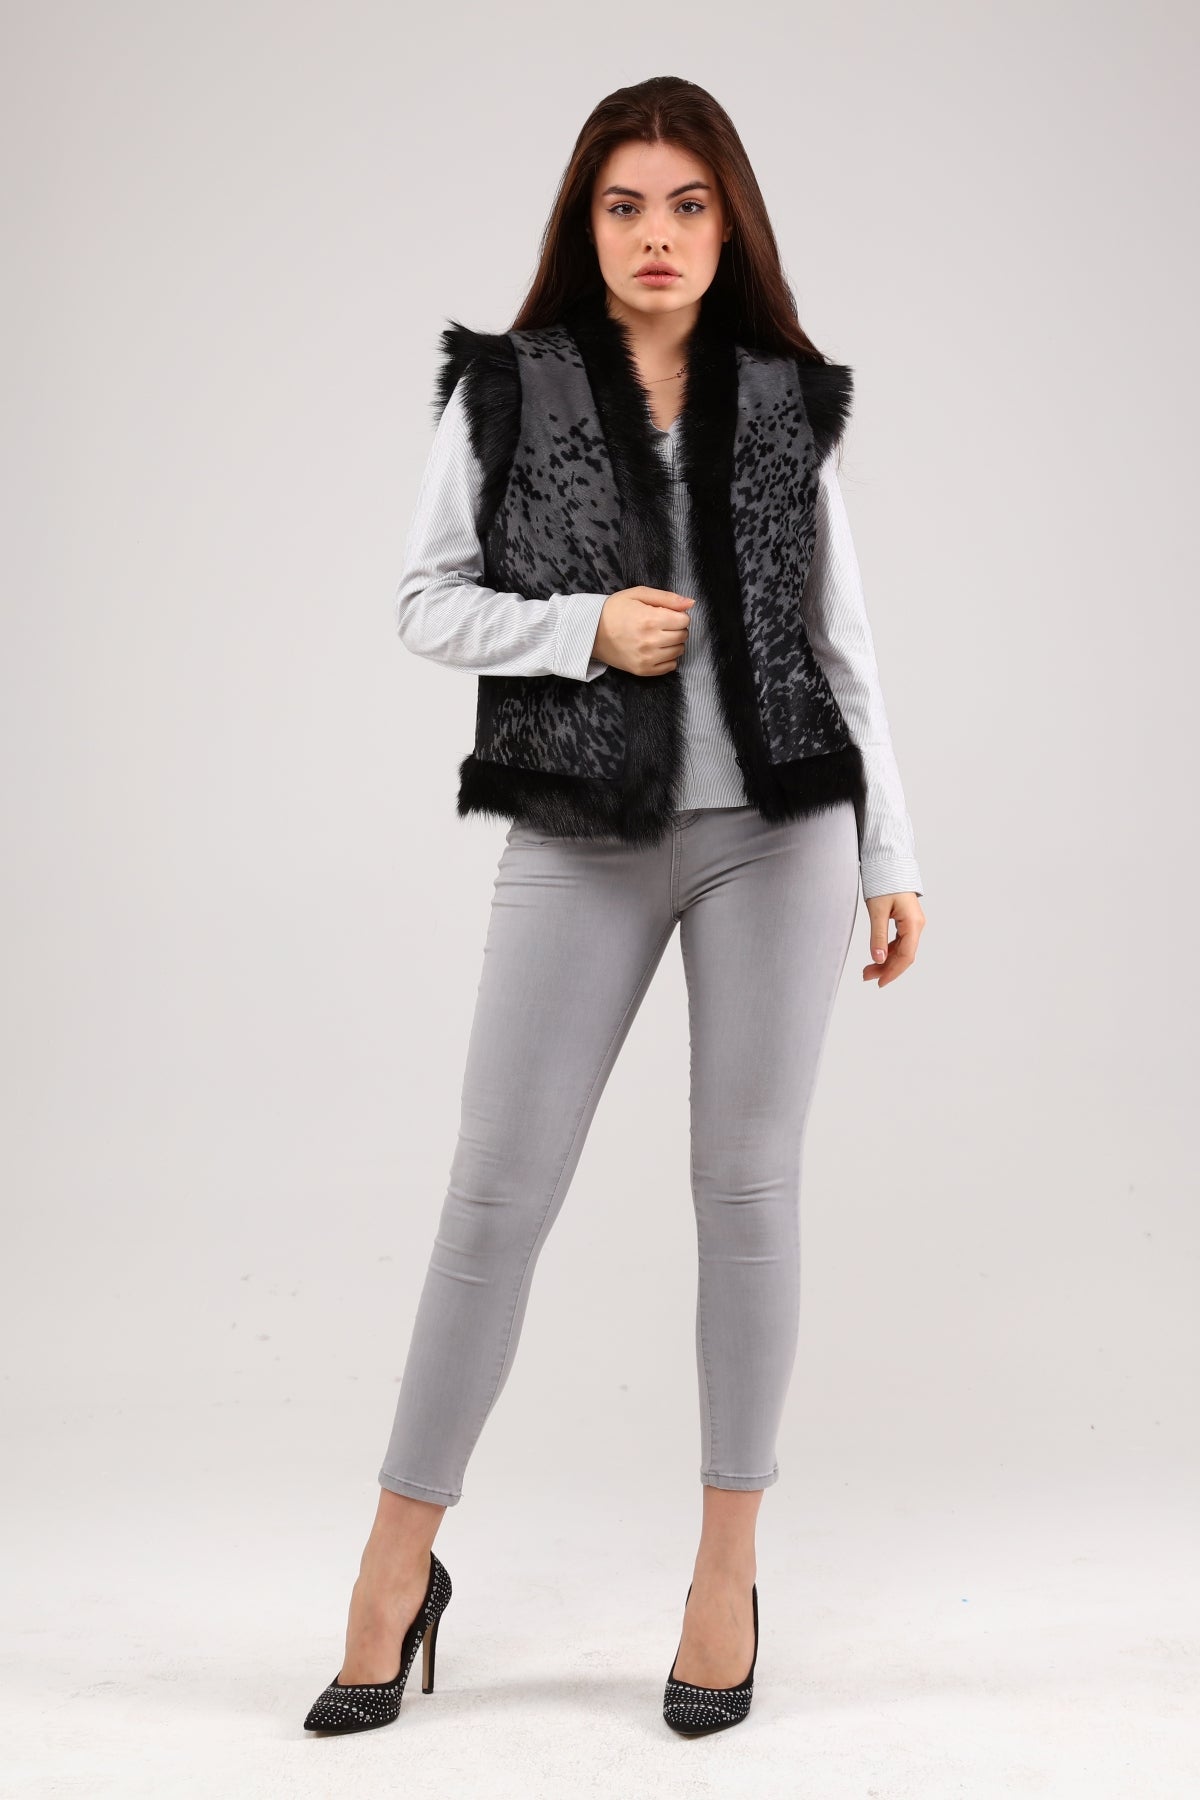 Gray Women's Patterned Leather Vest